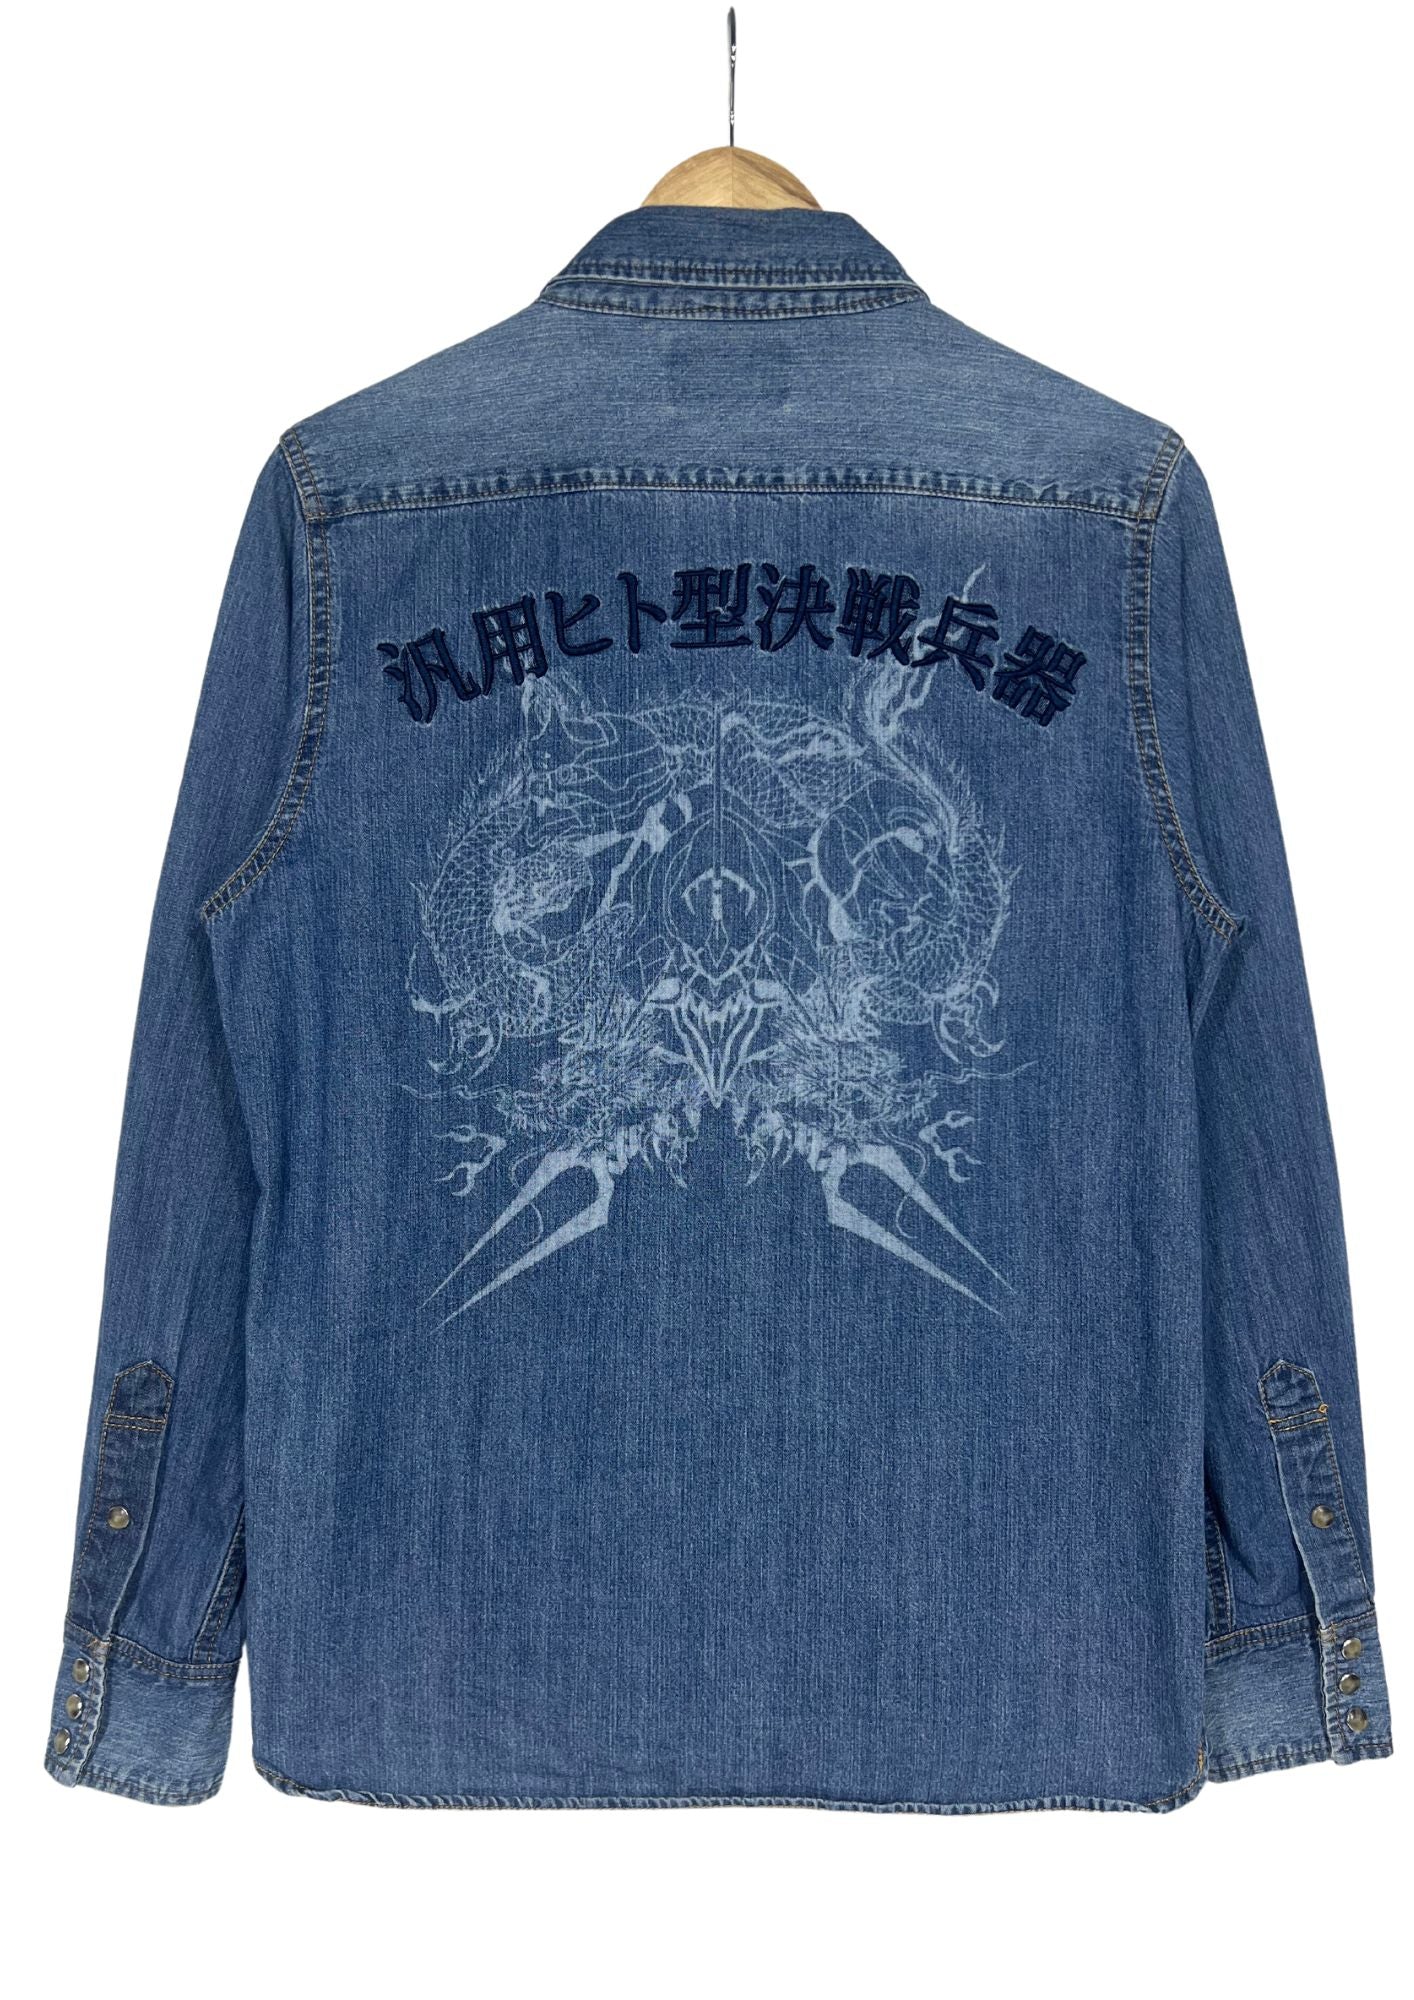 2010s Neon Genesis Evangelion x Nishiki Embroidered Denim L/S Shirts